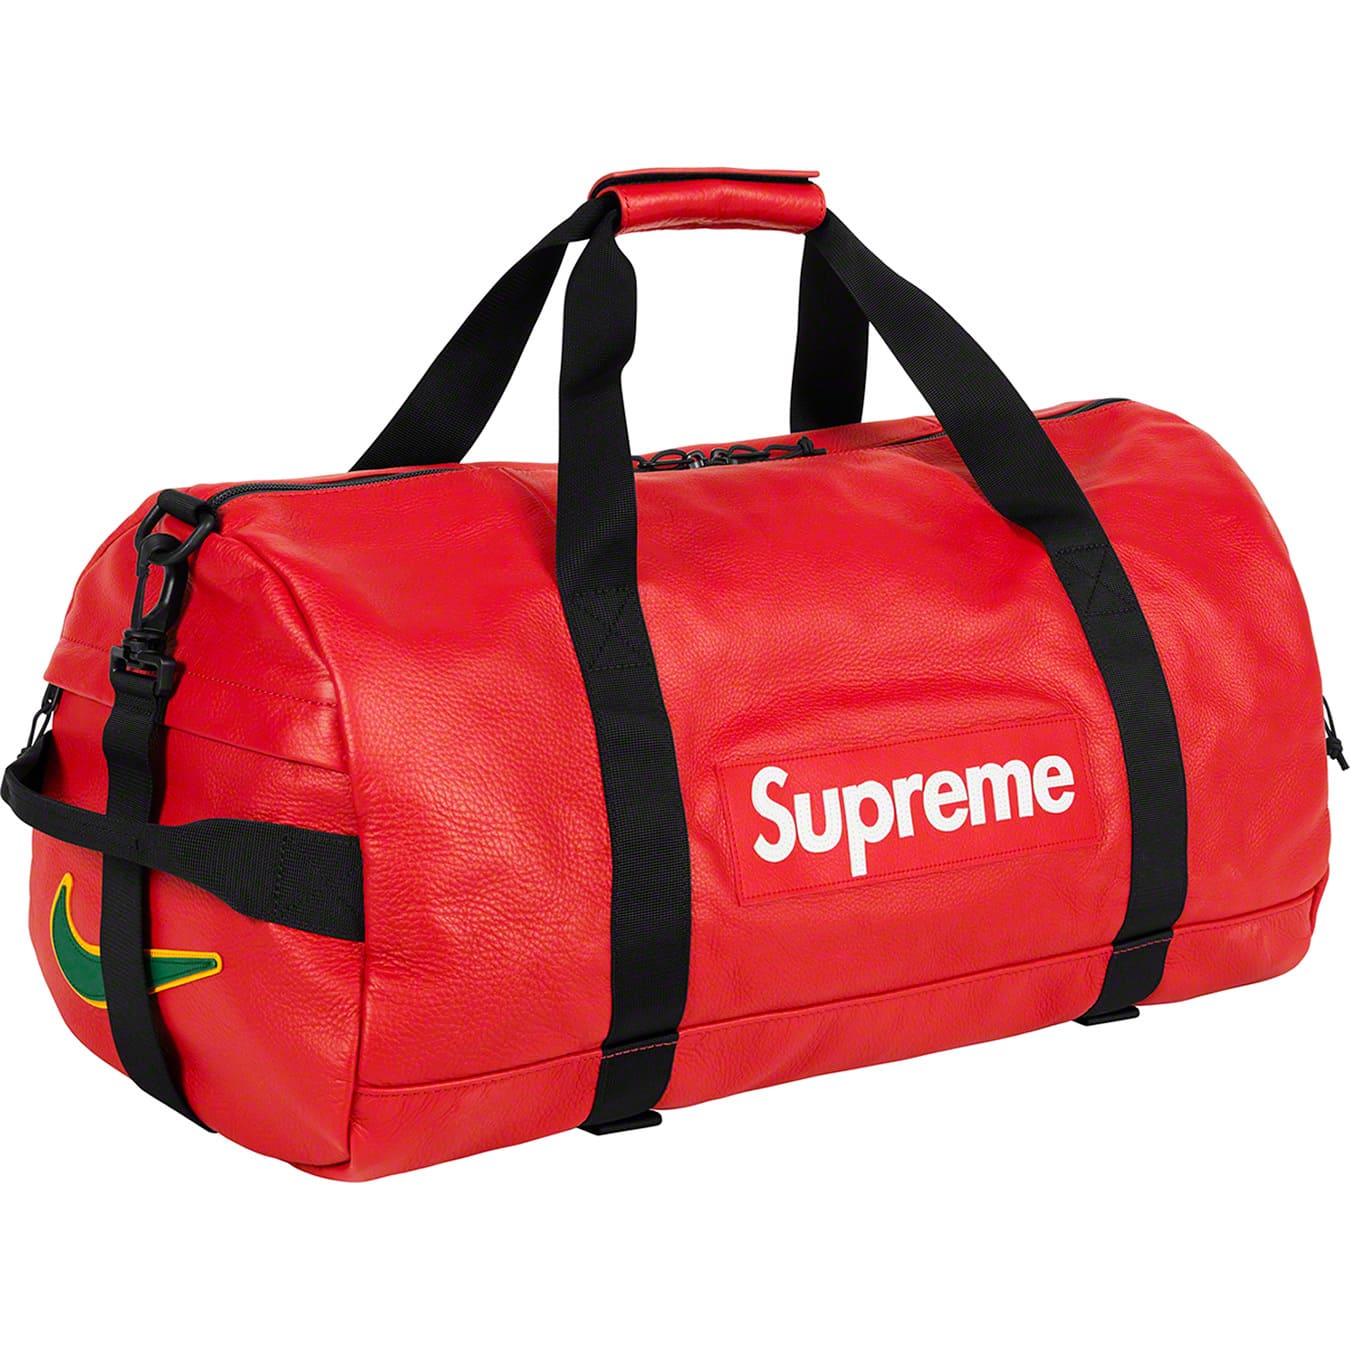 Supreme®/Nike® Leather Duffle Bag